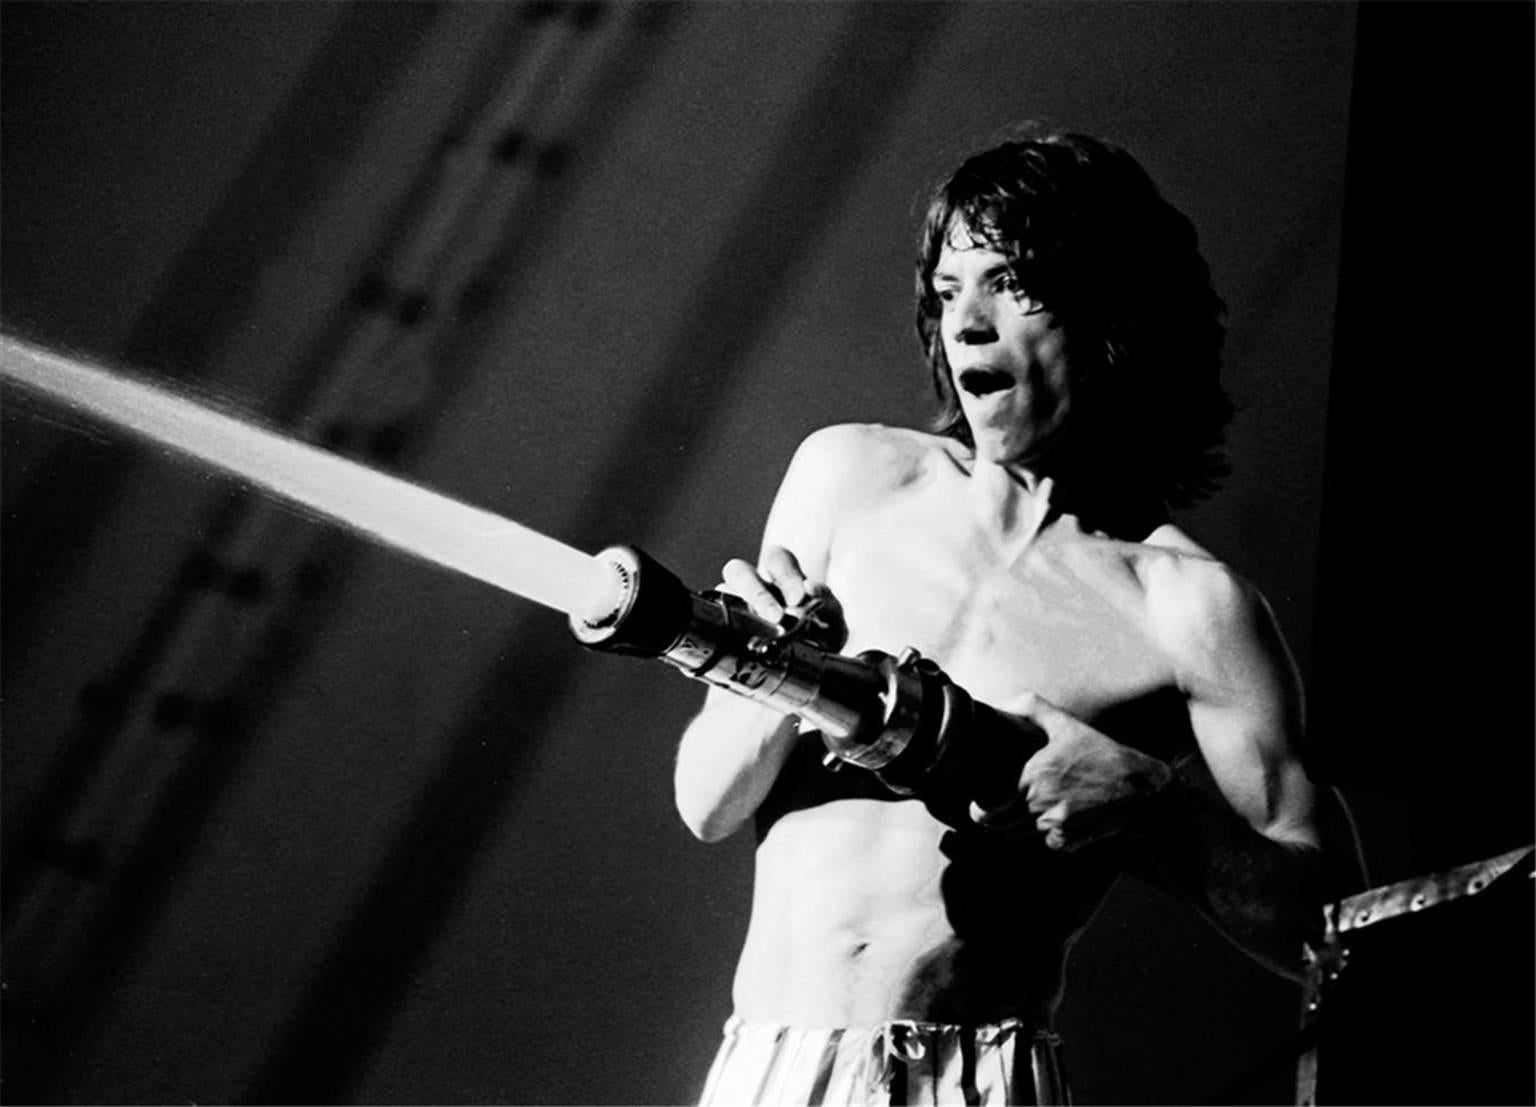 Jay Dickman Black and White Photograph - Mick Jagger sprays audience